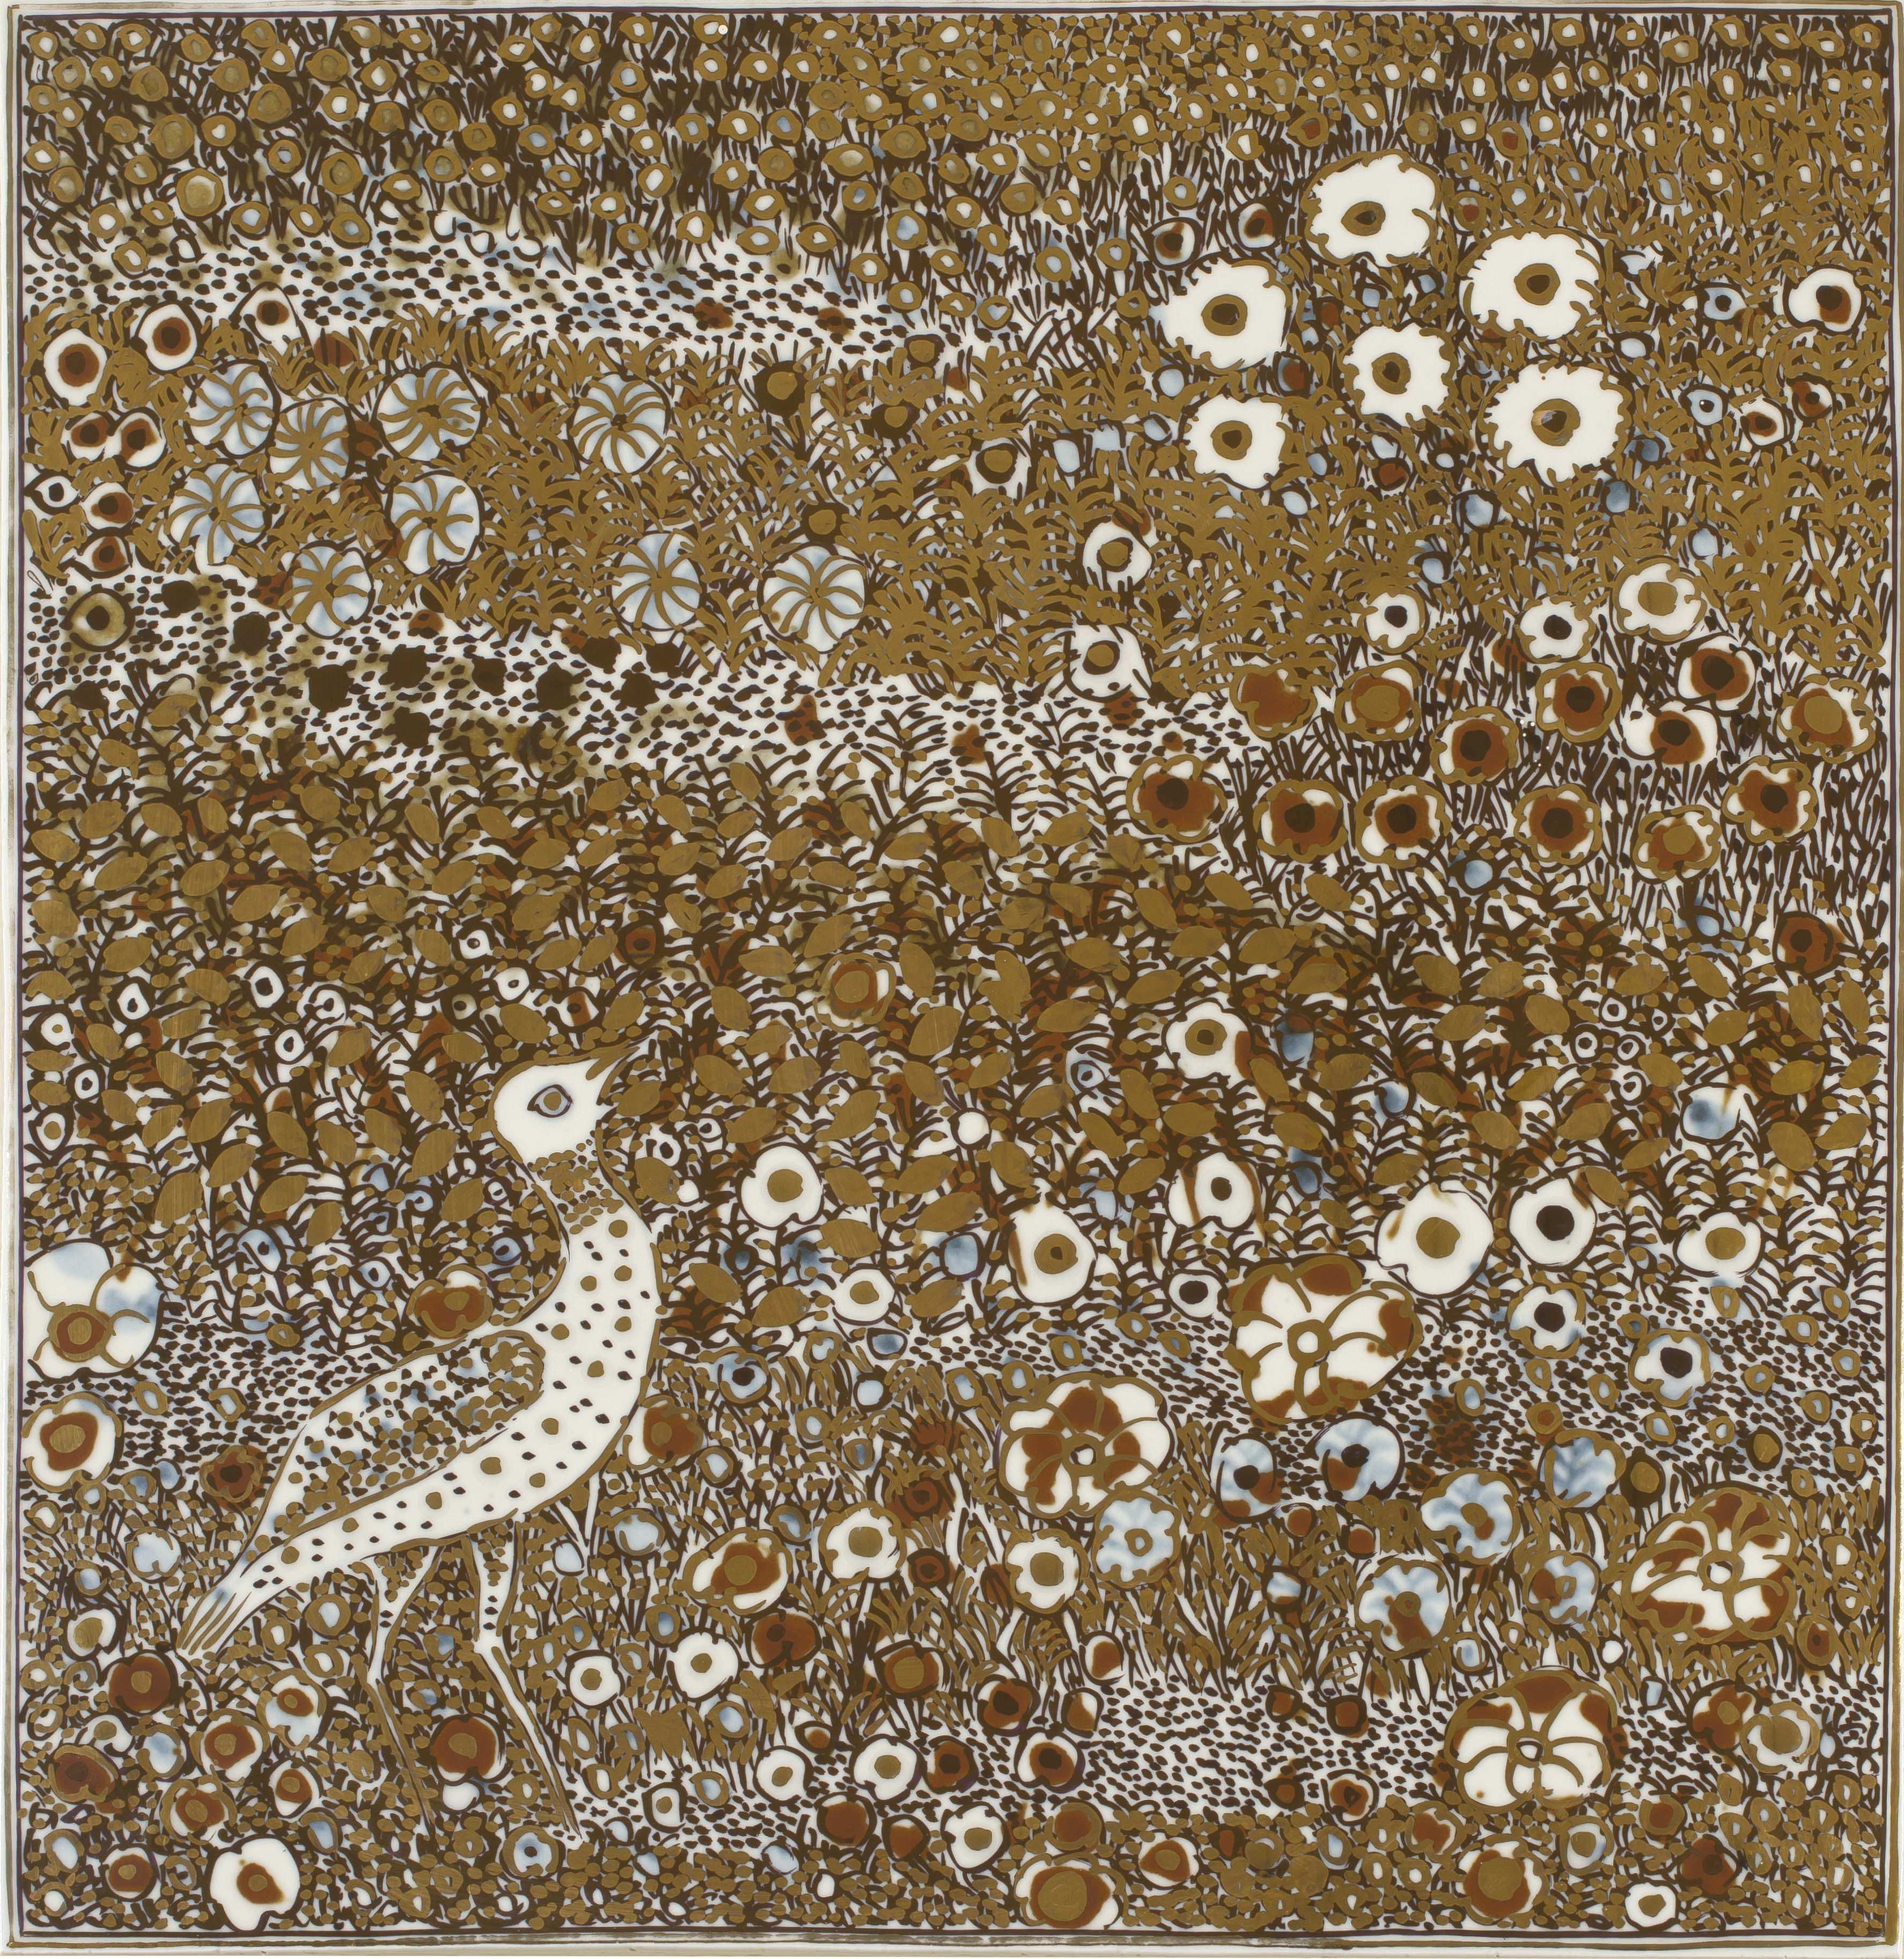 Esias Bosch; Ceramic Tile with Bird and Flower Motifs